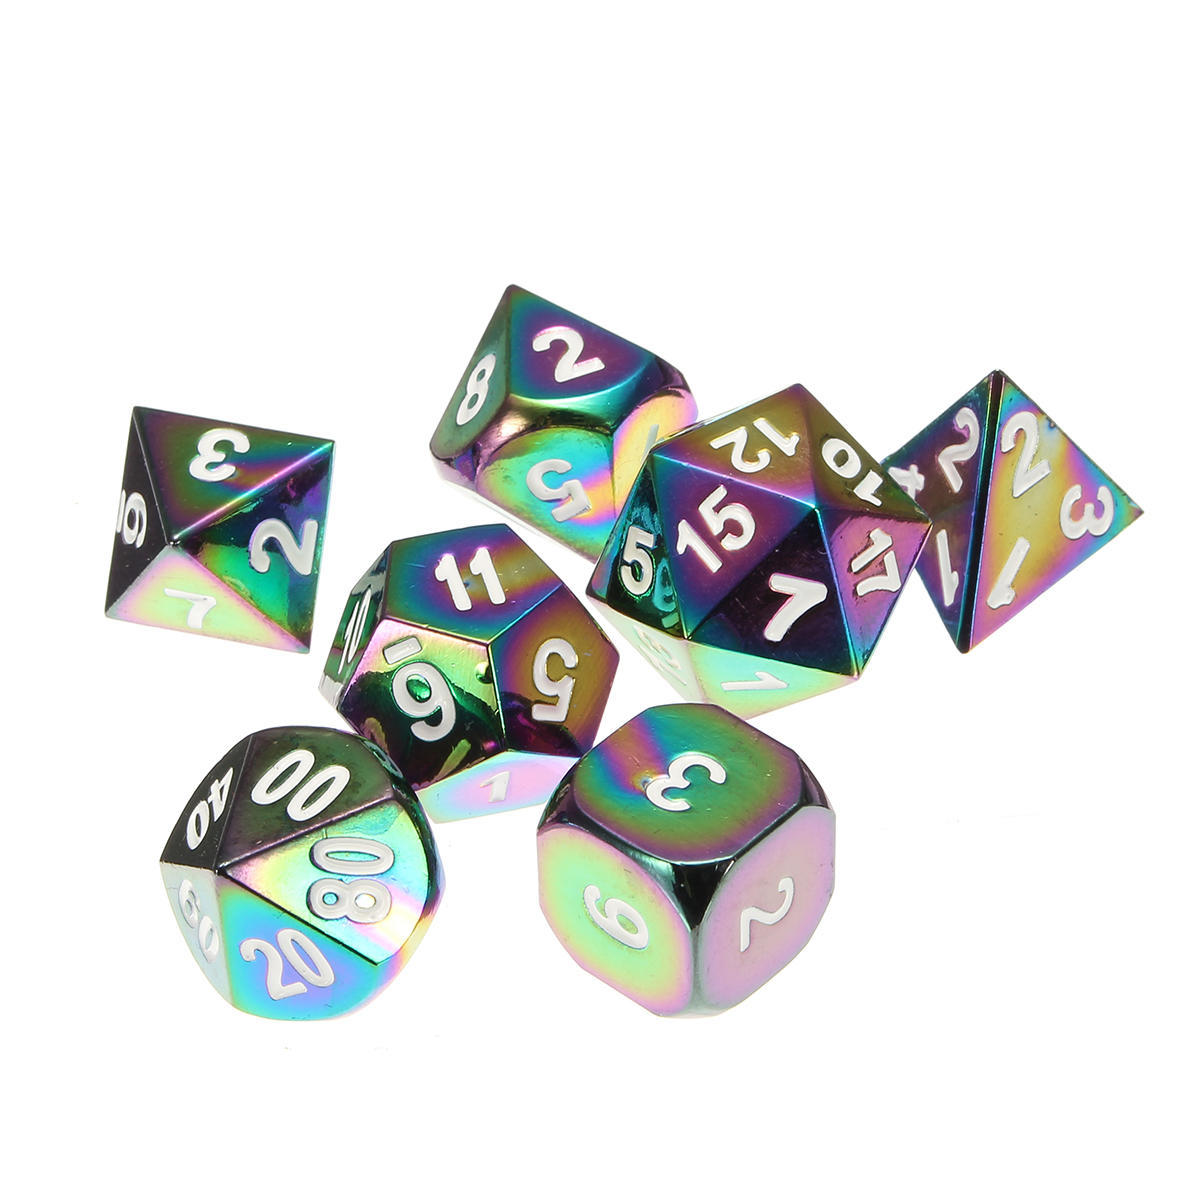 7 stuks colorful zinklegering polyhedral dice set bordspel multisided dobbelstenen gadget: